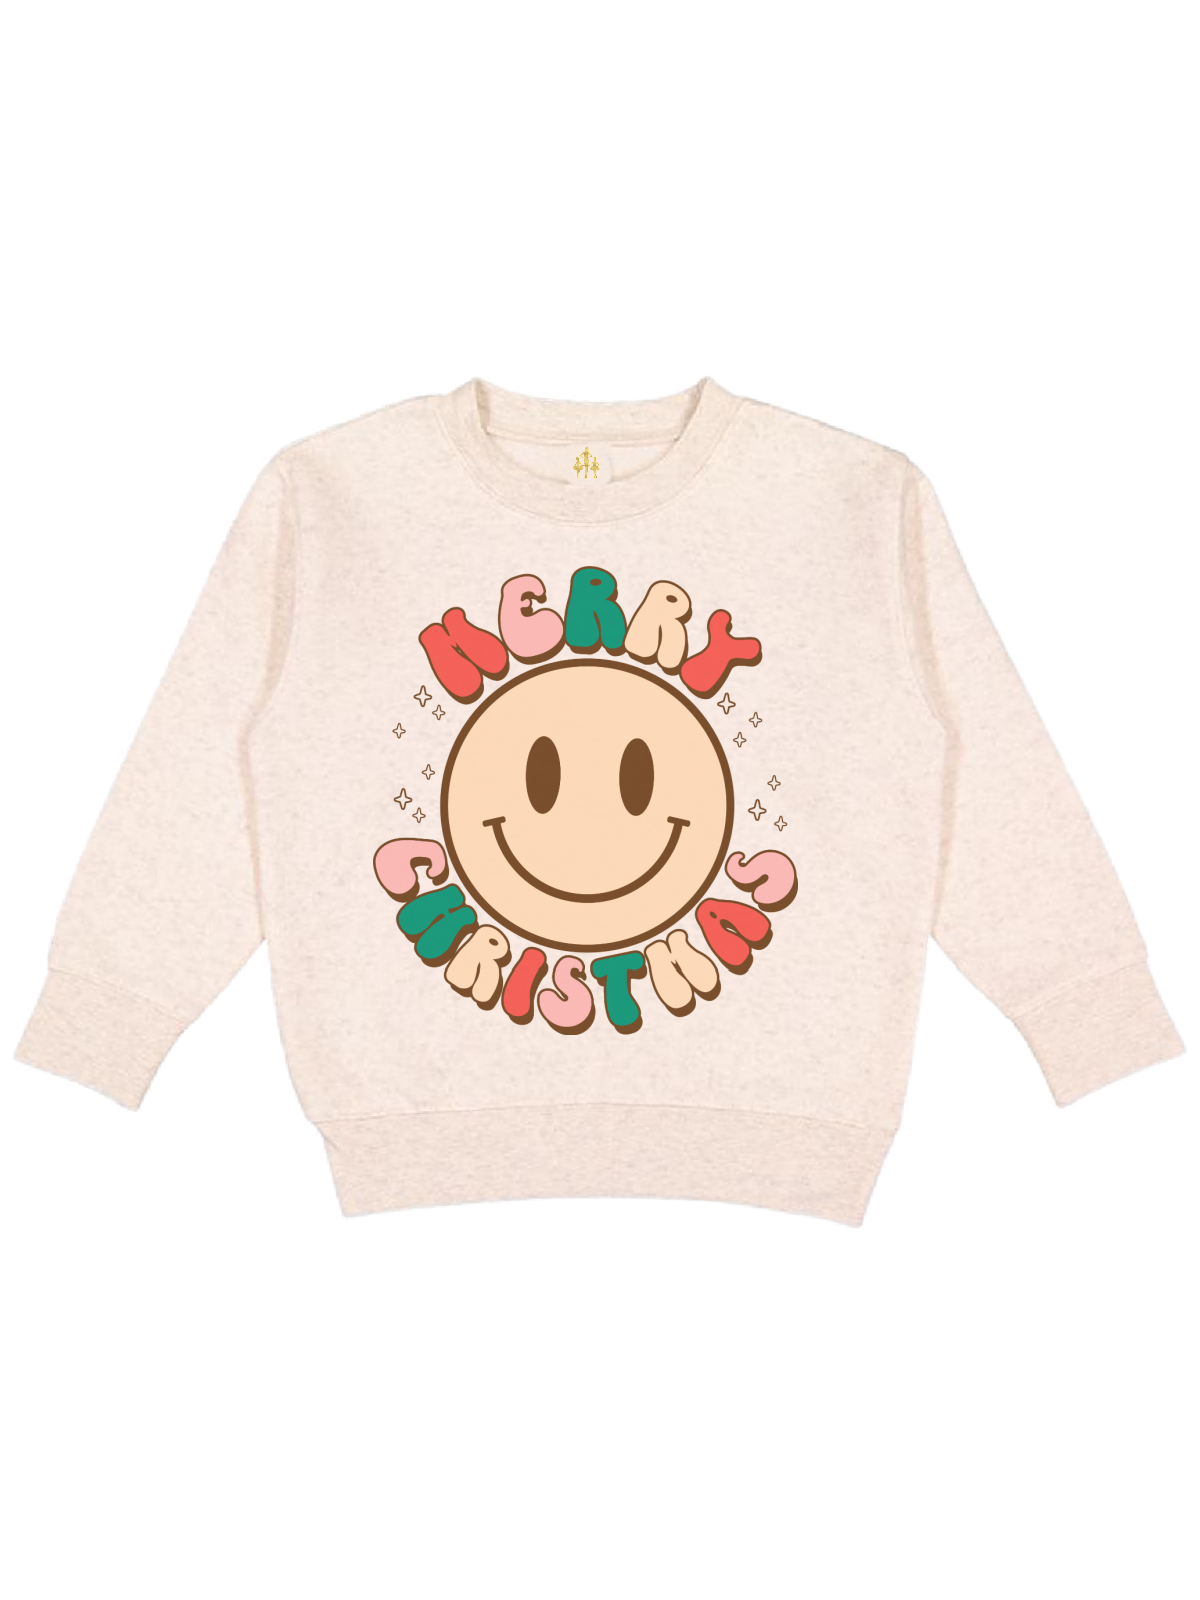 Merry Christmas Kids Retro Sweatshirt